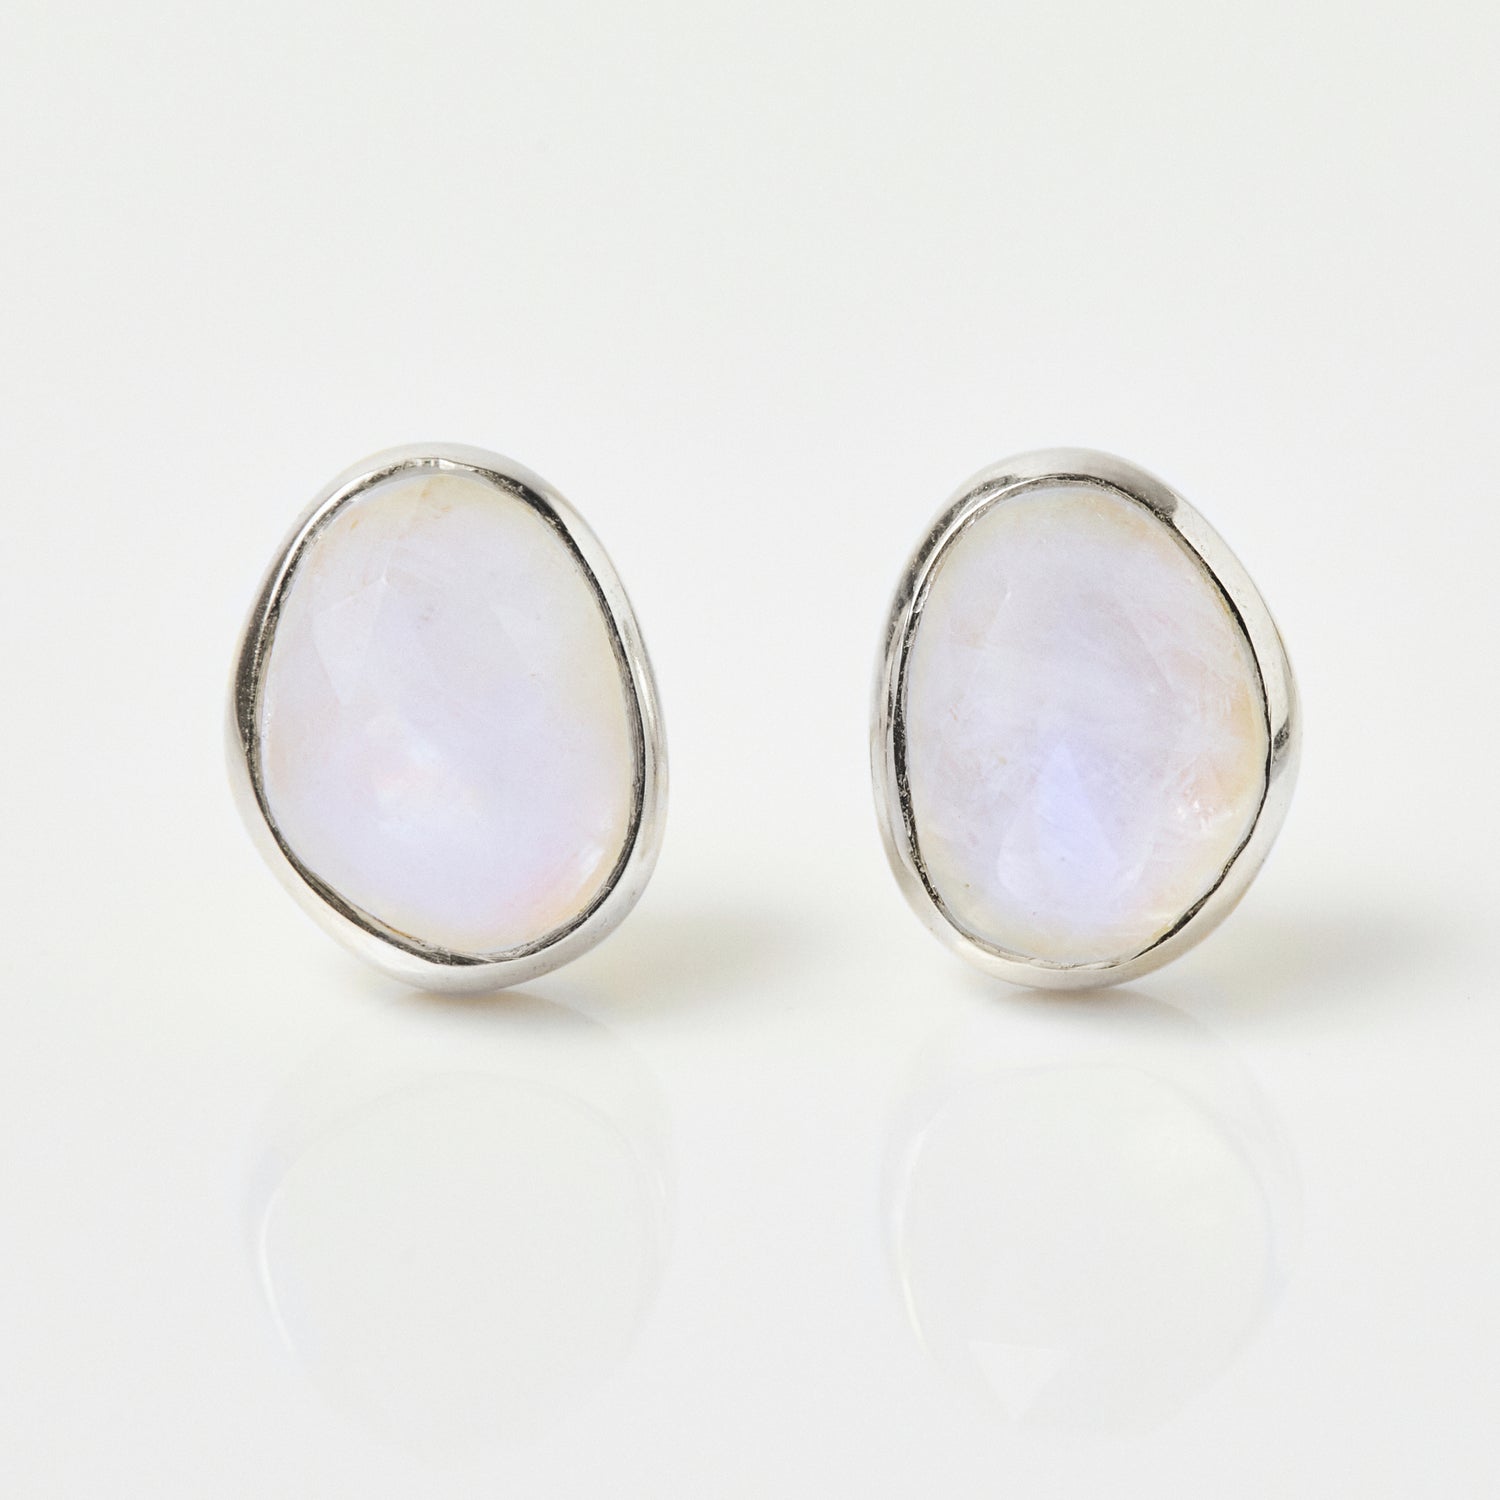 Sterling Silver Simple Stone Earrings in Moonstone - Earrings - Carrie Elizabeth